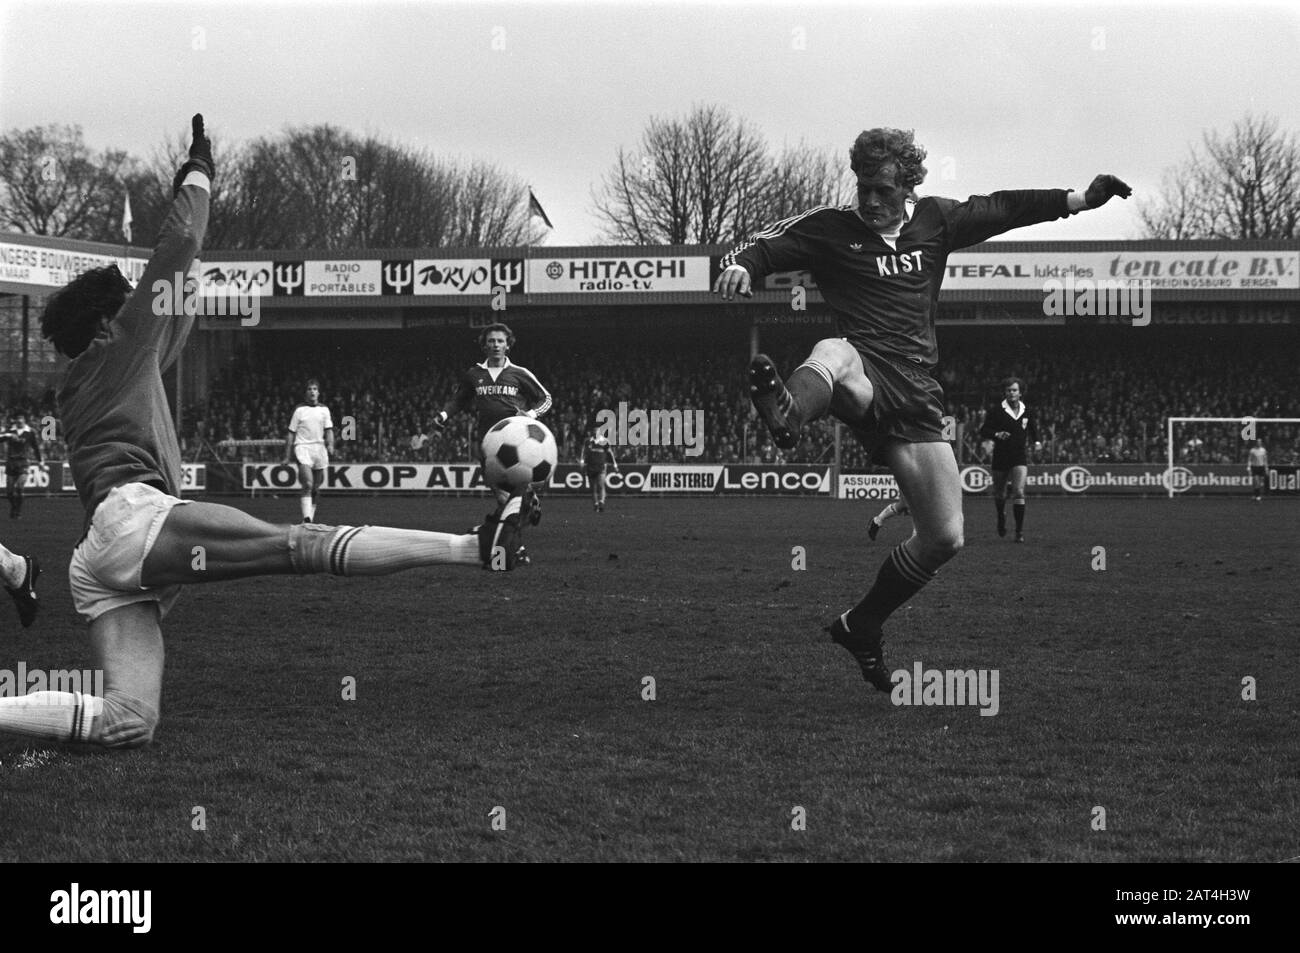 Football Match Az '67 - Fc Amsterdam: 2-0 Jan Jongbloed (Fc Amsterdam)  Saves A Shot Of Kees Kist Date: 20 March 1977 Location: Alkmaar,  Noord-Holland Keywords: Sport, Football, Matches Person Name :